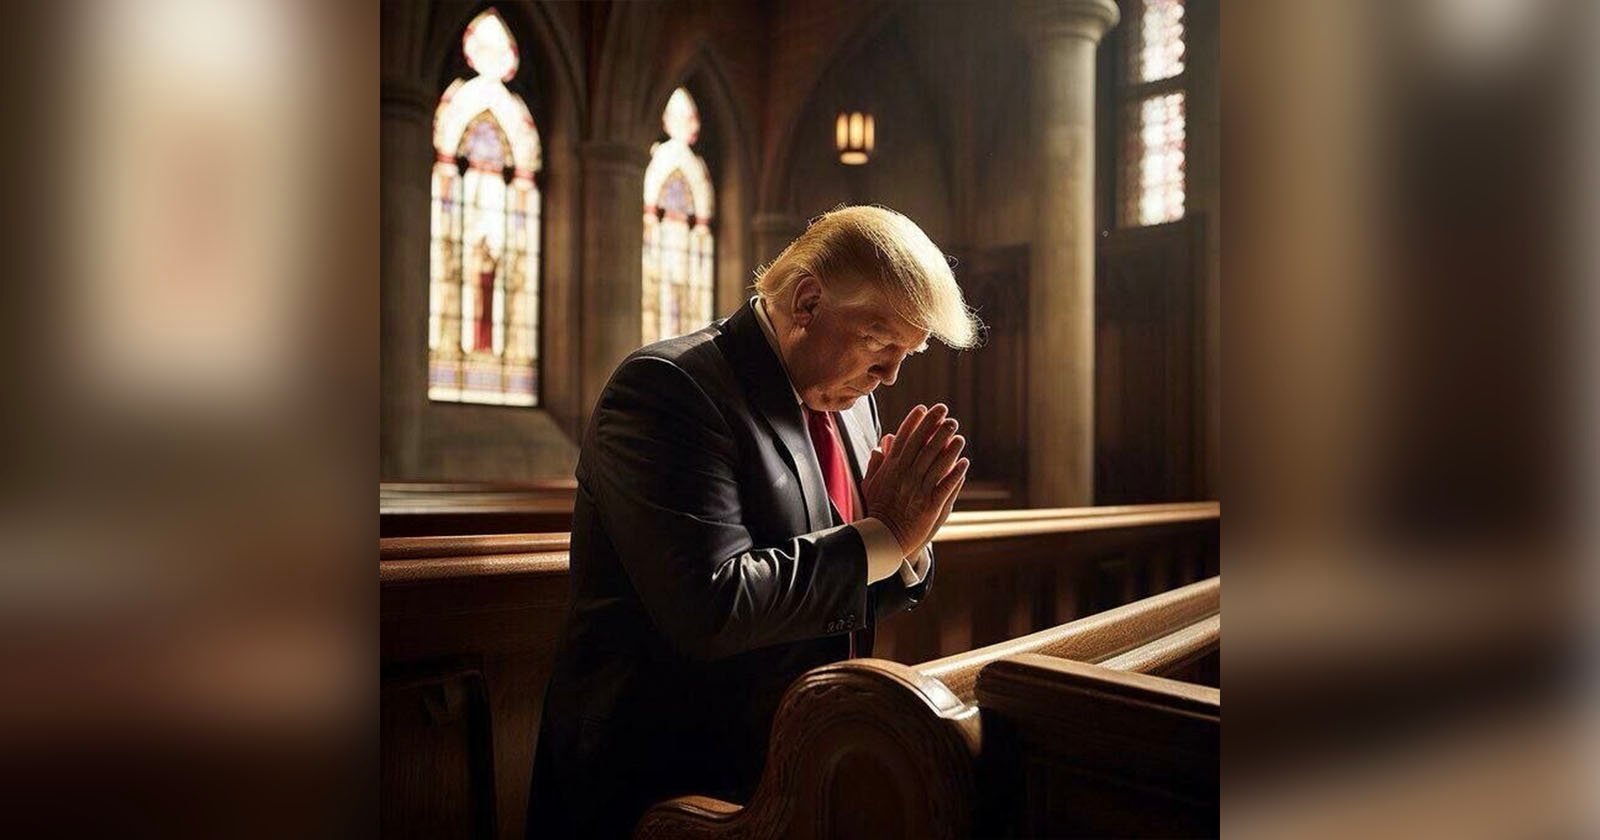  trump shares image himself praying six fingers 